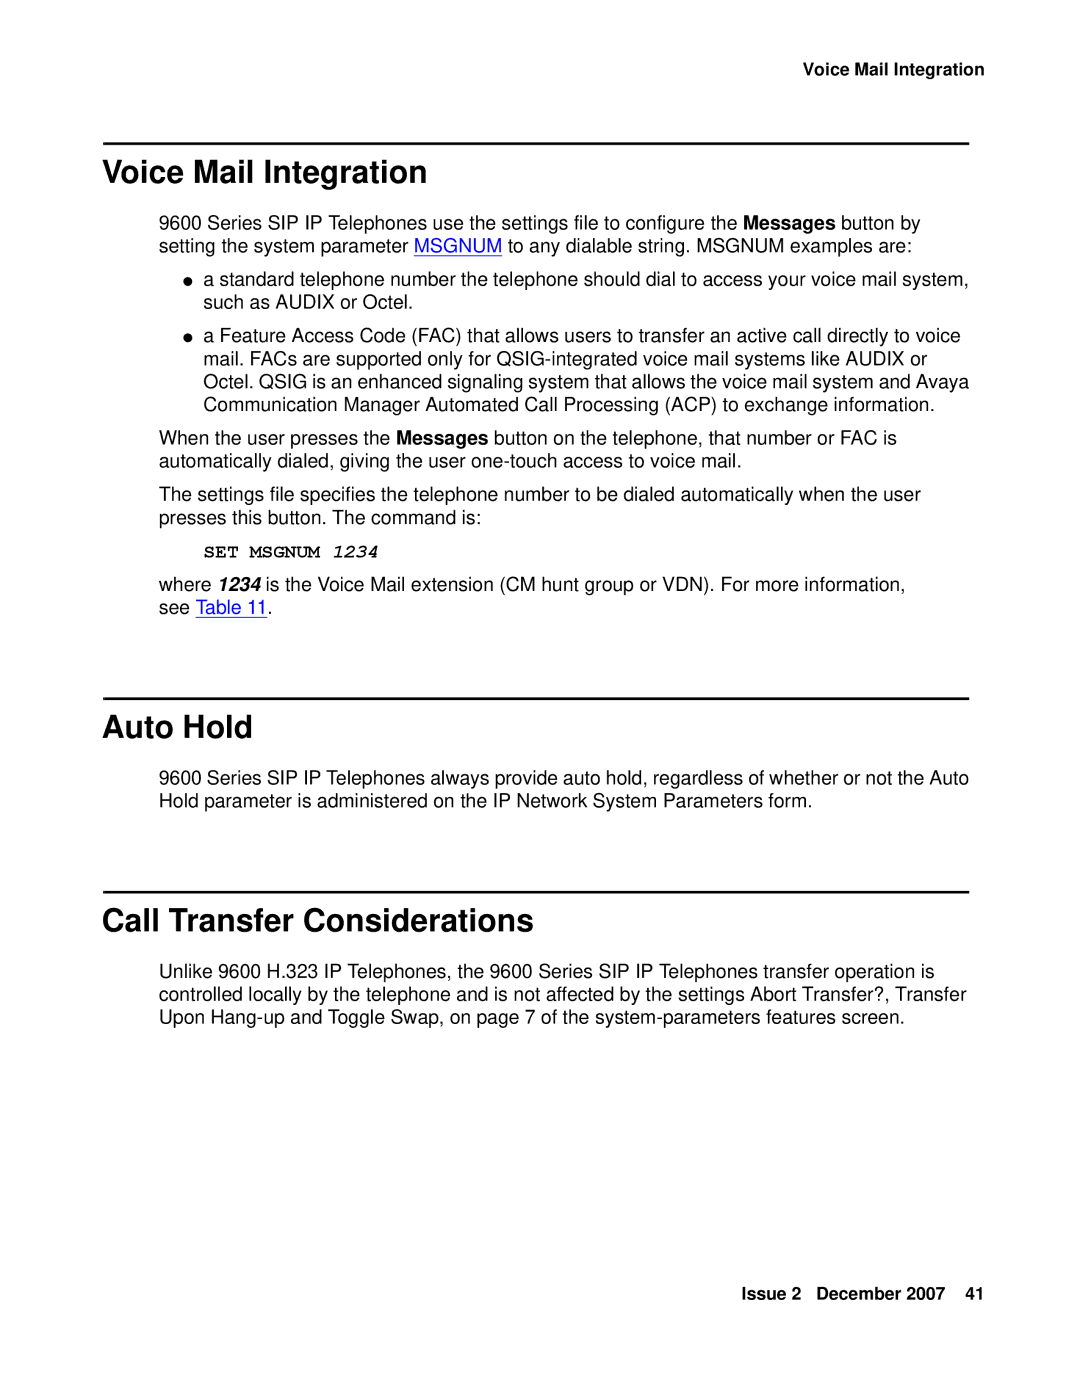 Avaya 9600 manual Voice Mail Integration, Auto Hold, Call Transfer Considerations 